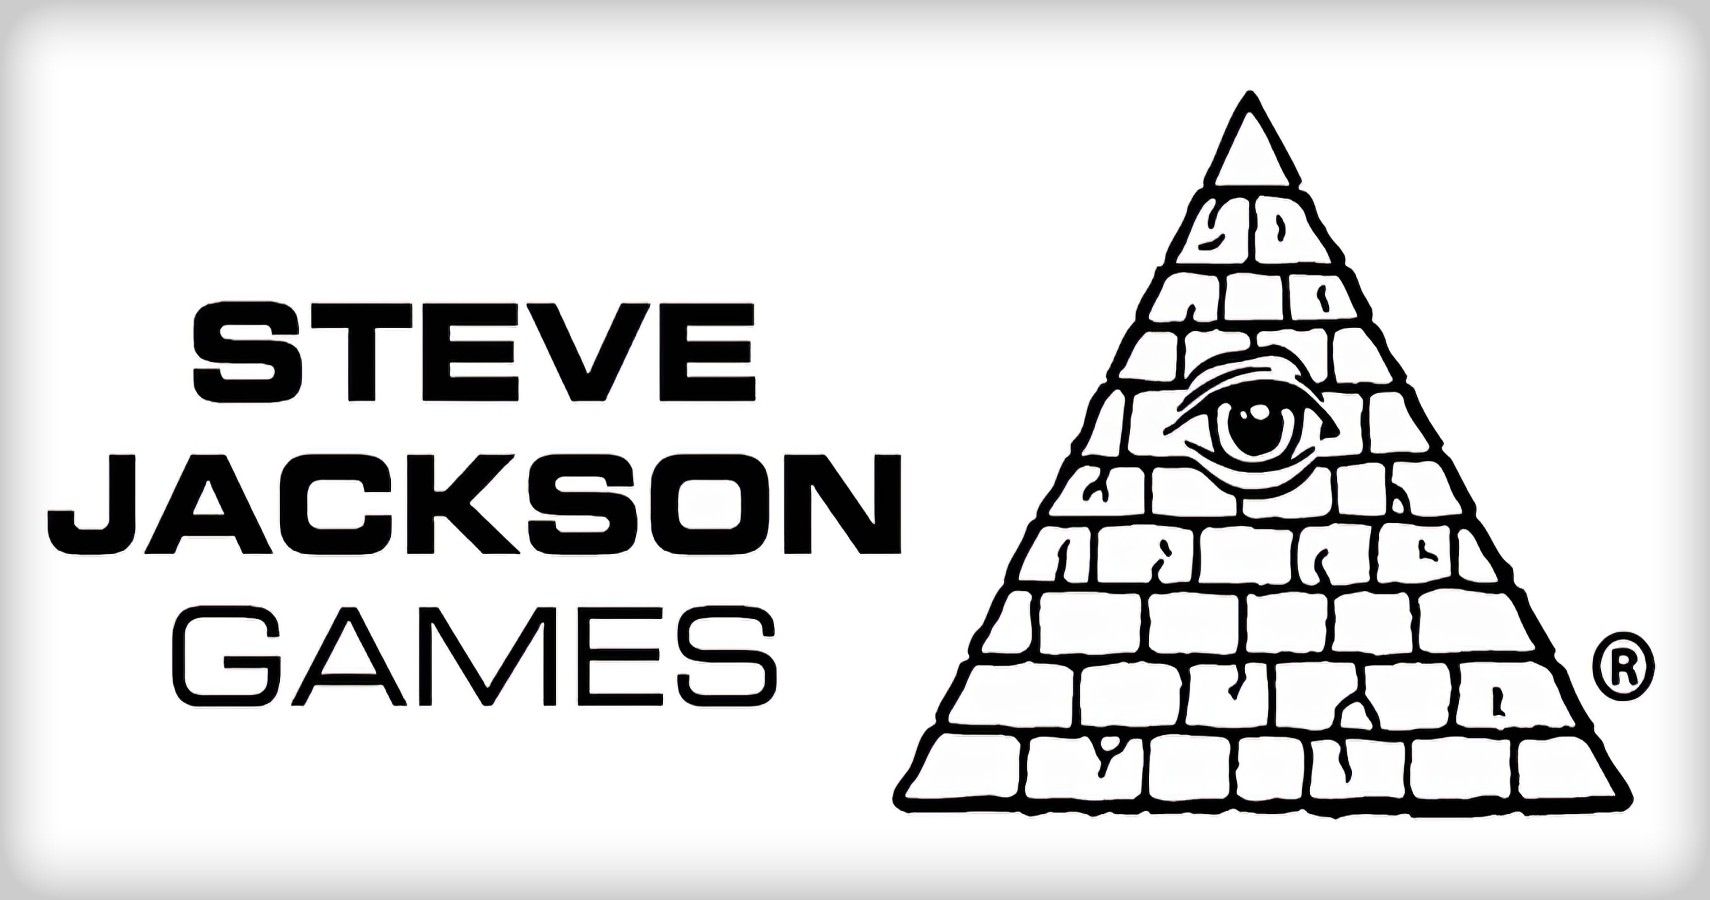 Video: 20th Anniversary of The Raid on Steve Jackson Games